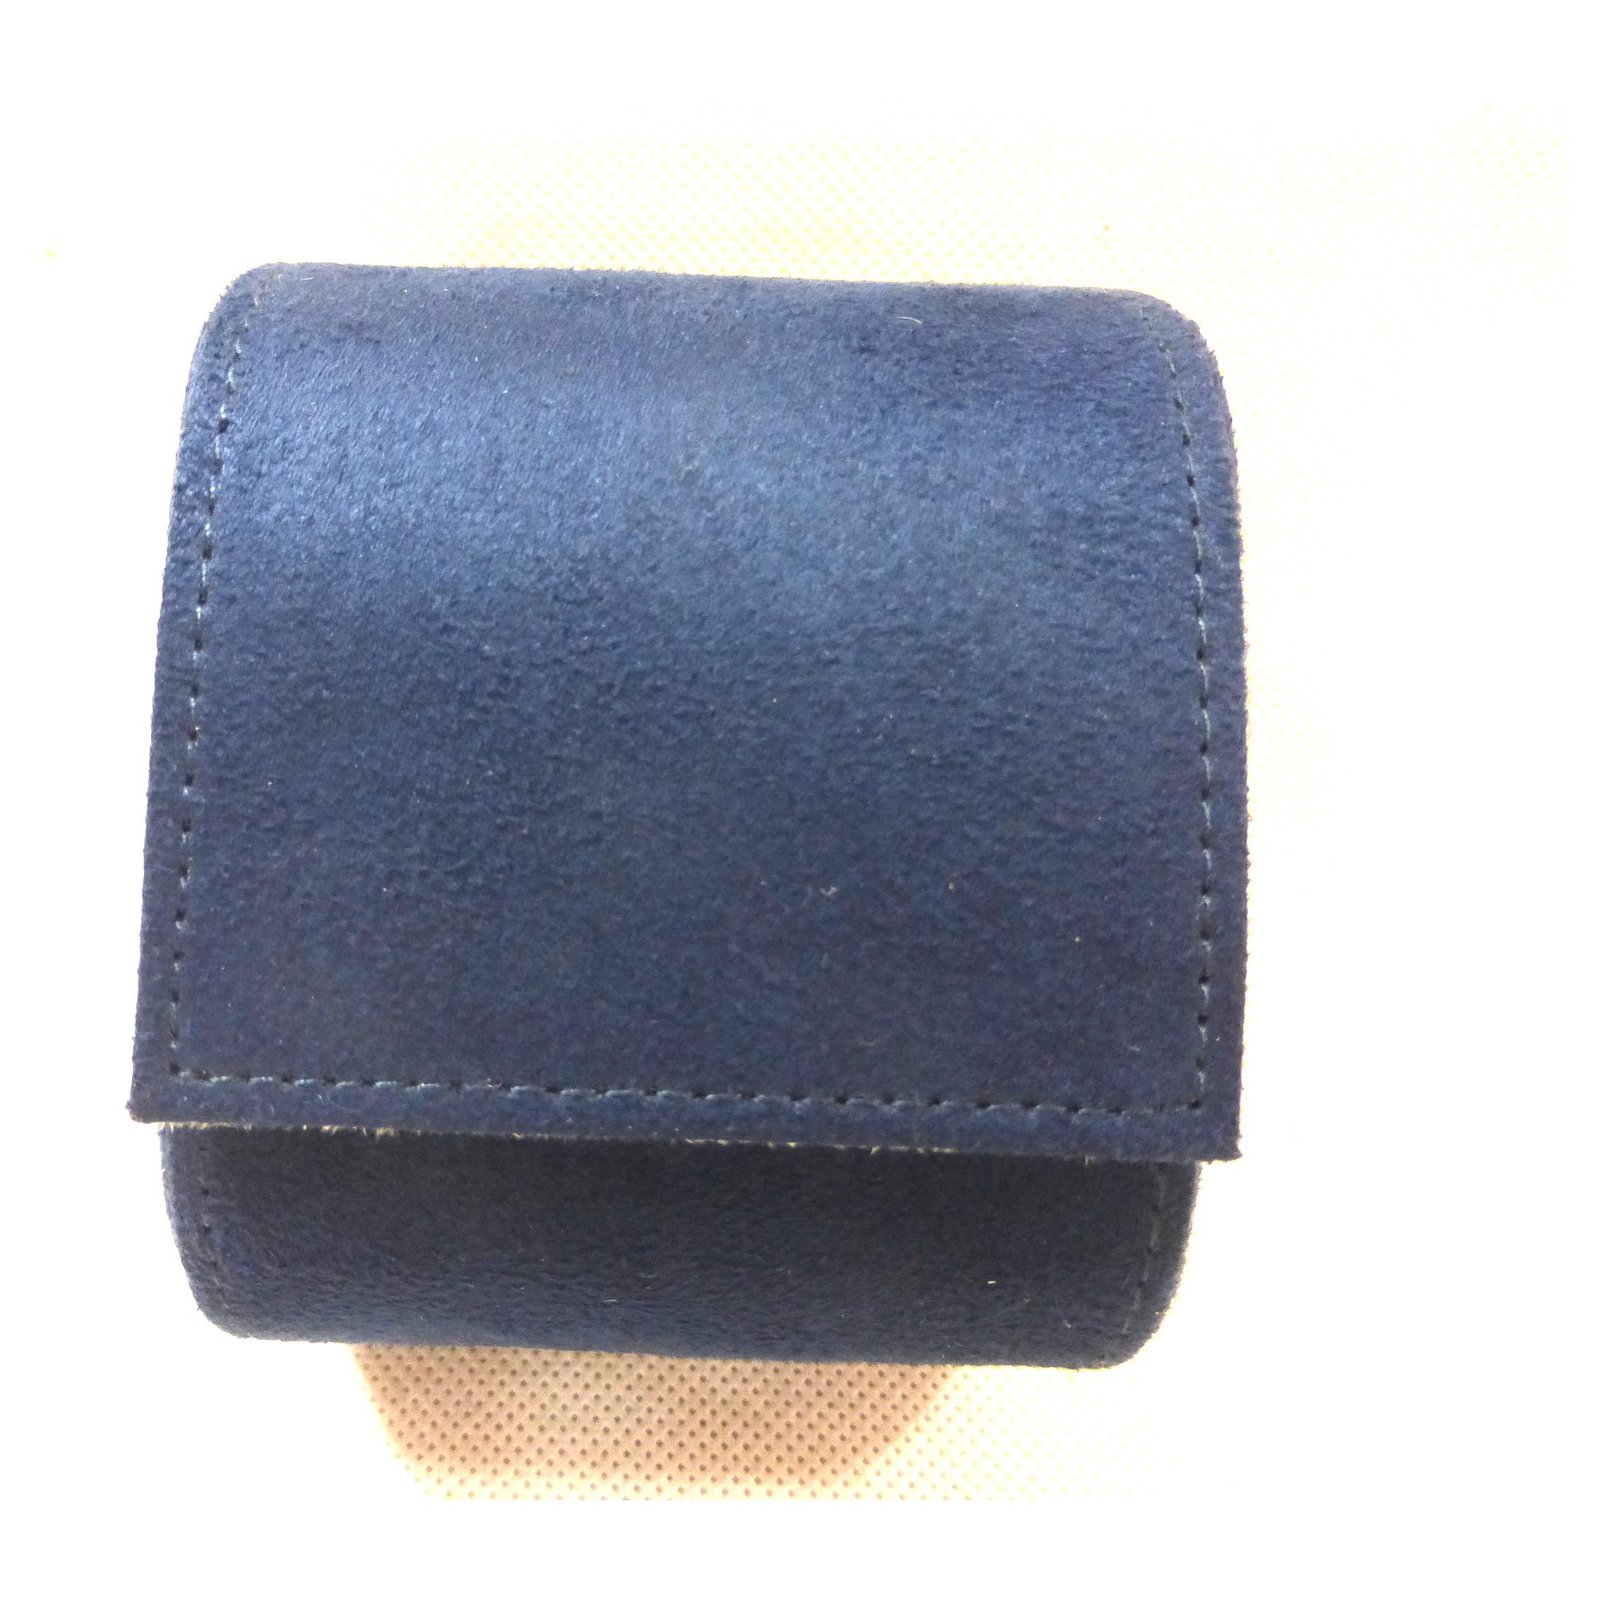 LOUIS VUITTON Travel Watch Case Authentic Blue Suede Box Cushion Accessory